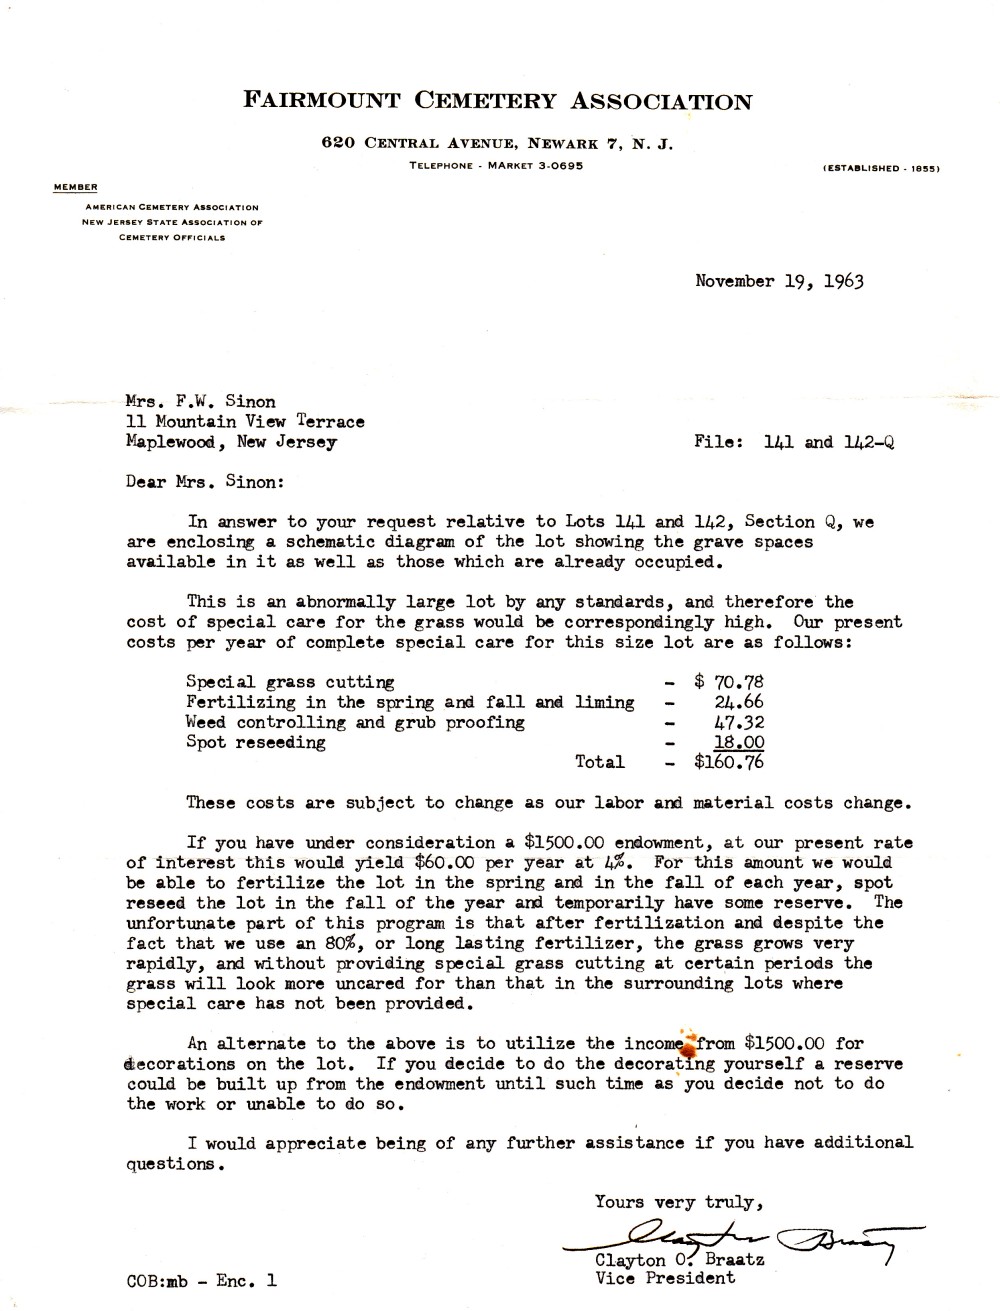 Braatz-letter-1963-11-19